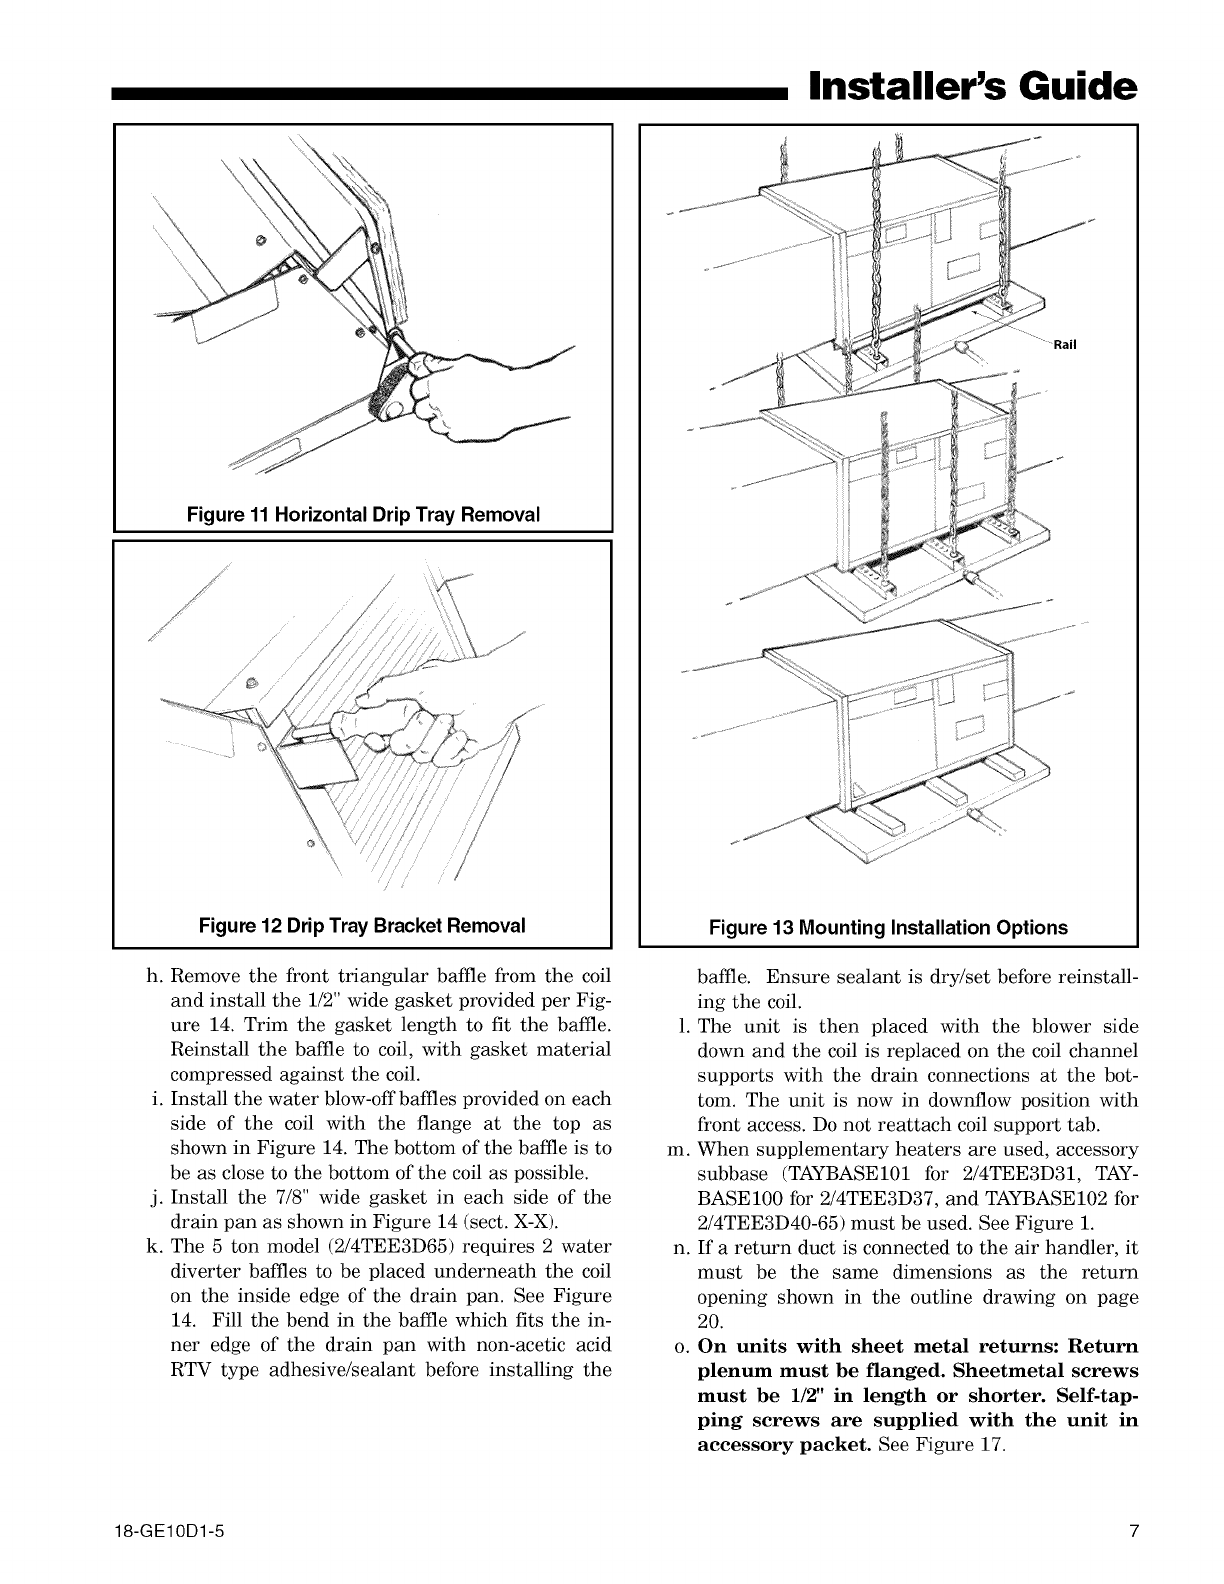 Trane condenser installation manual